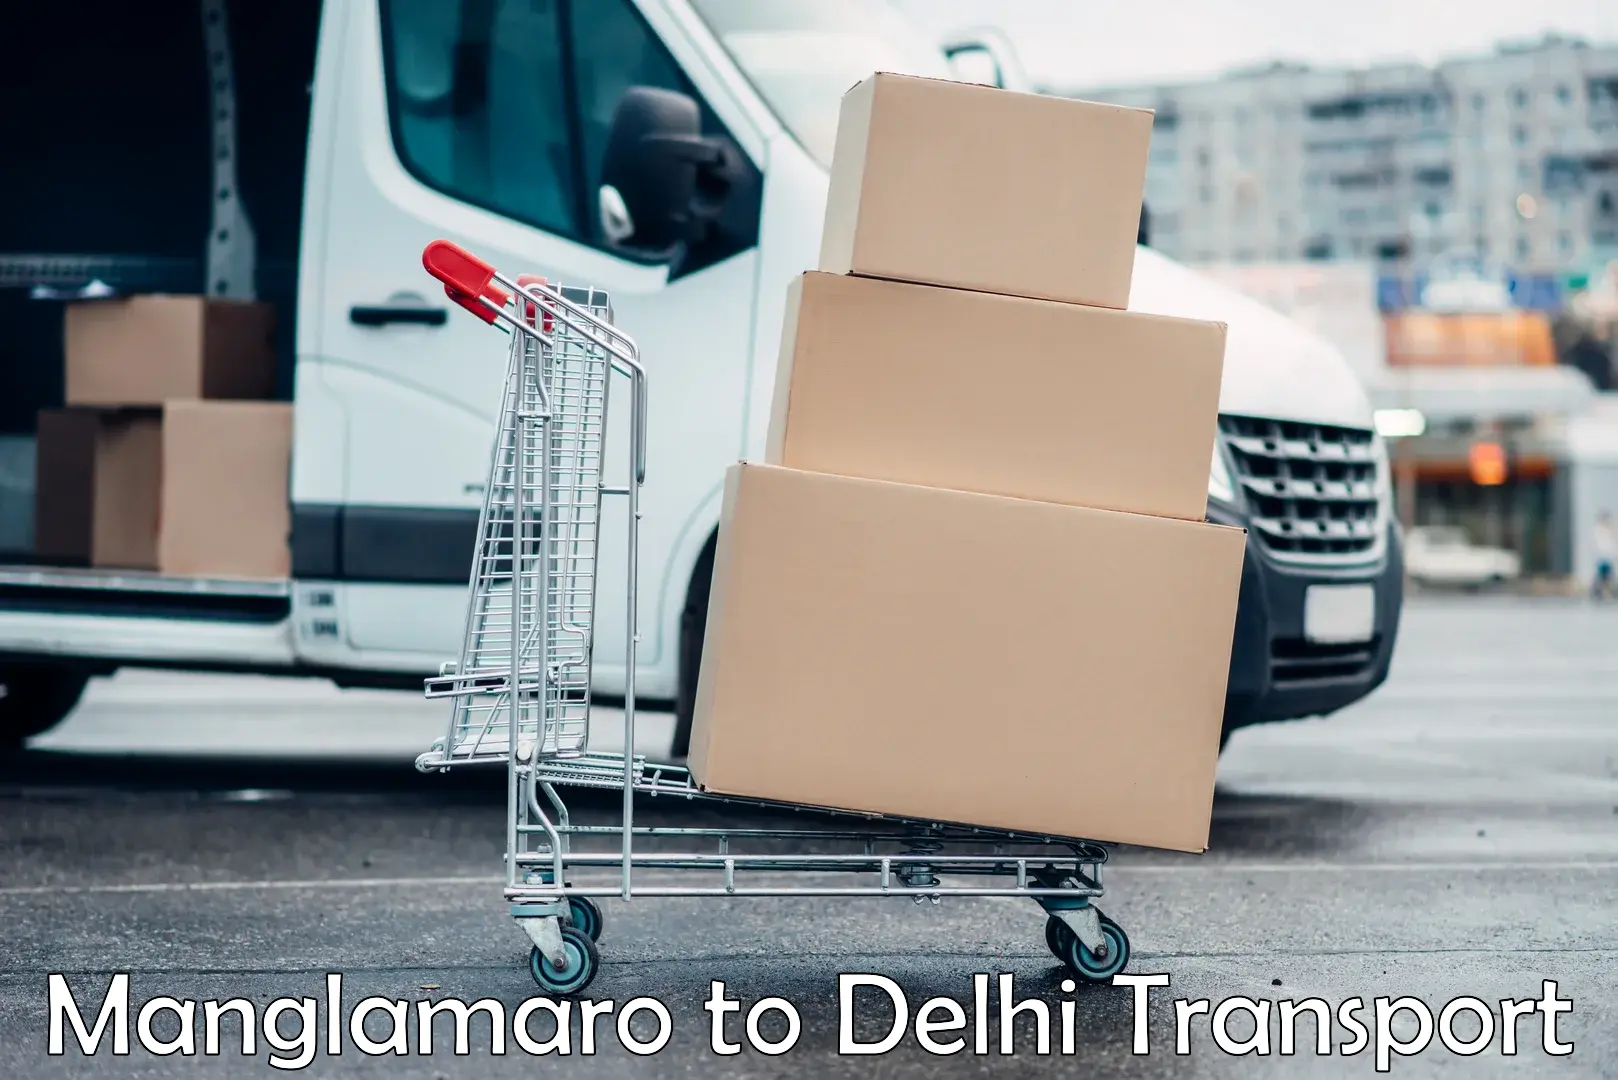 Daily transport service Manglamaro to East Delhi